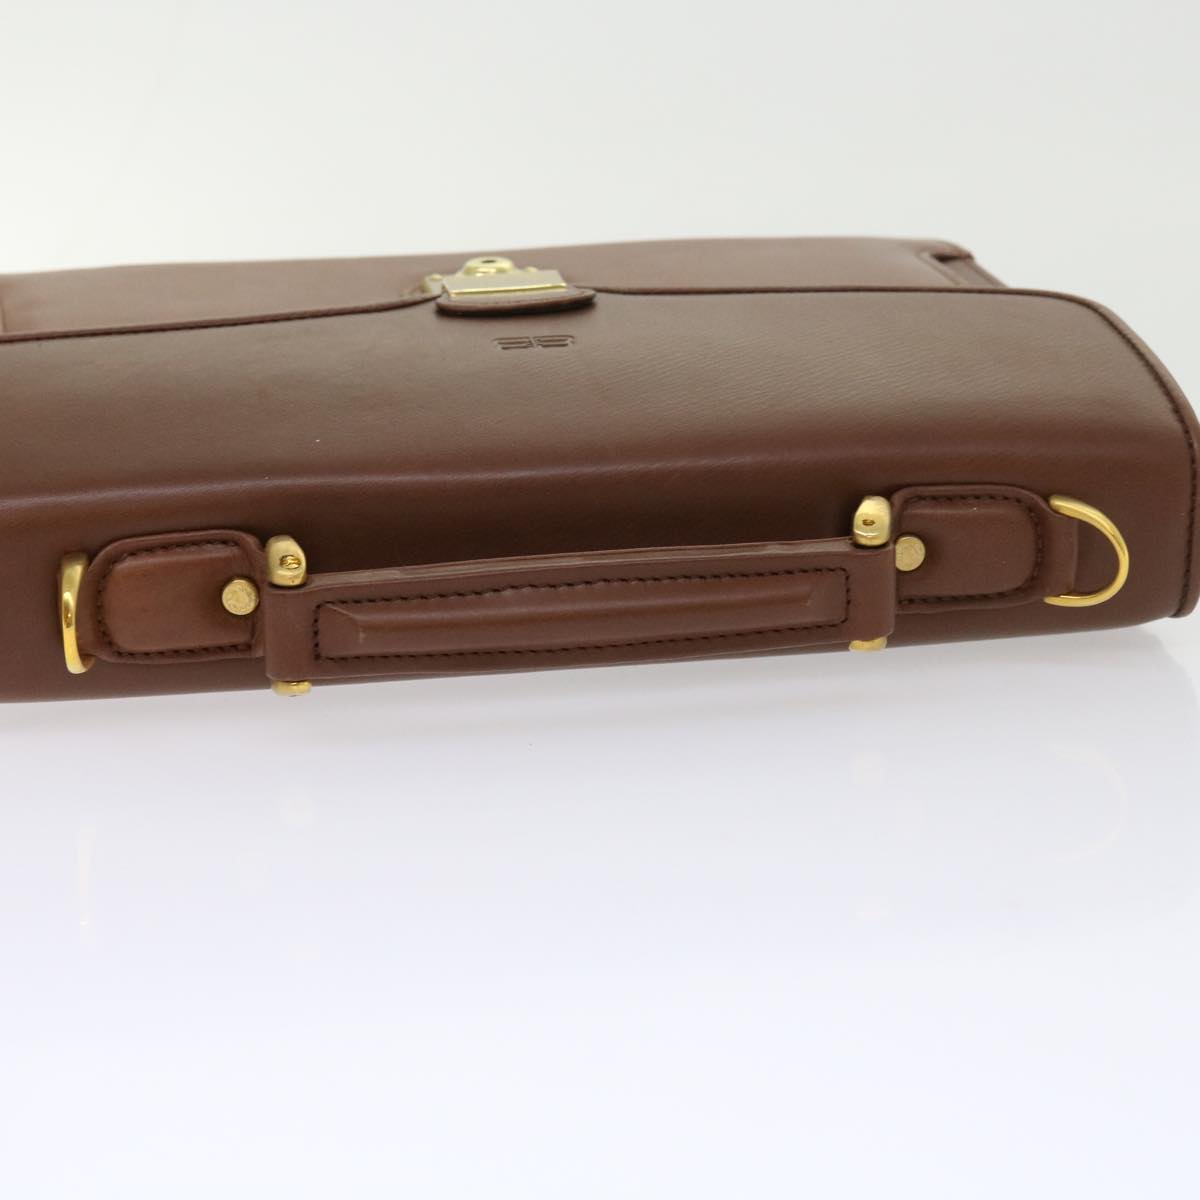 Balenciaga Shoulder Bag Leather 2way Brown Auth Bs8363